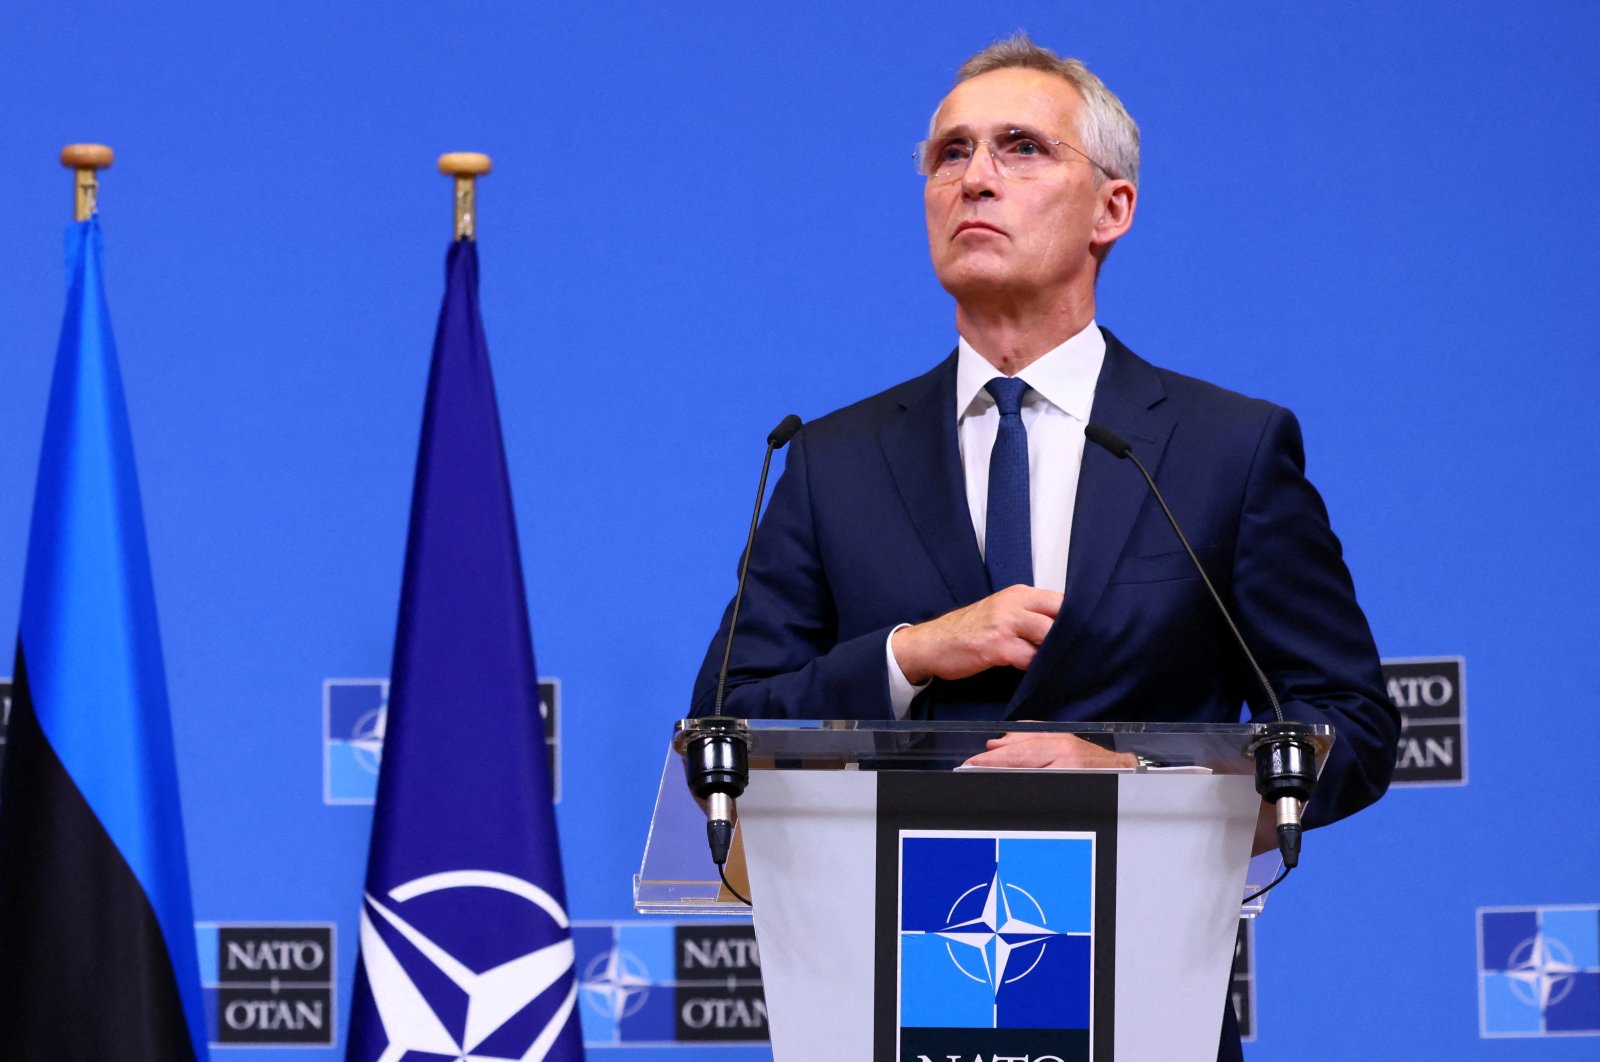 Masa jabatan kepala NATO Stoltenberg diperpanjang menjelang pertemuan puncak